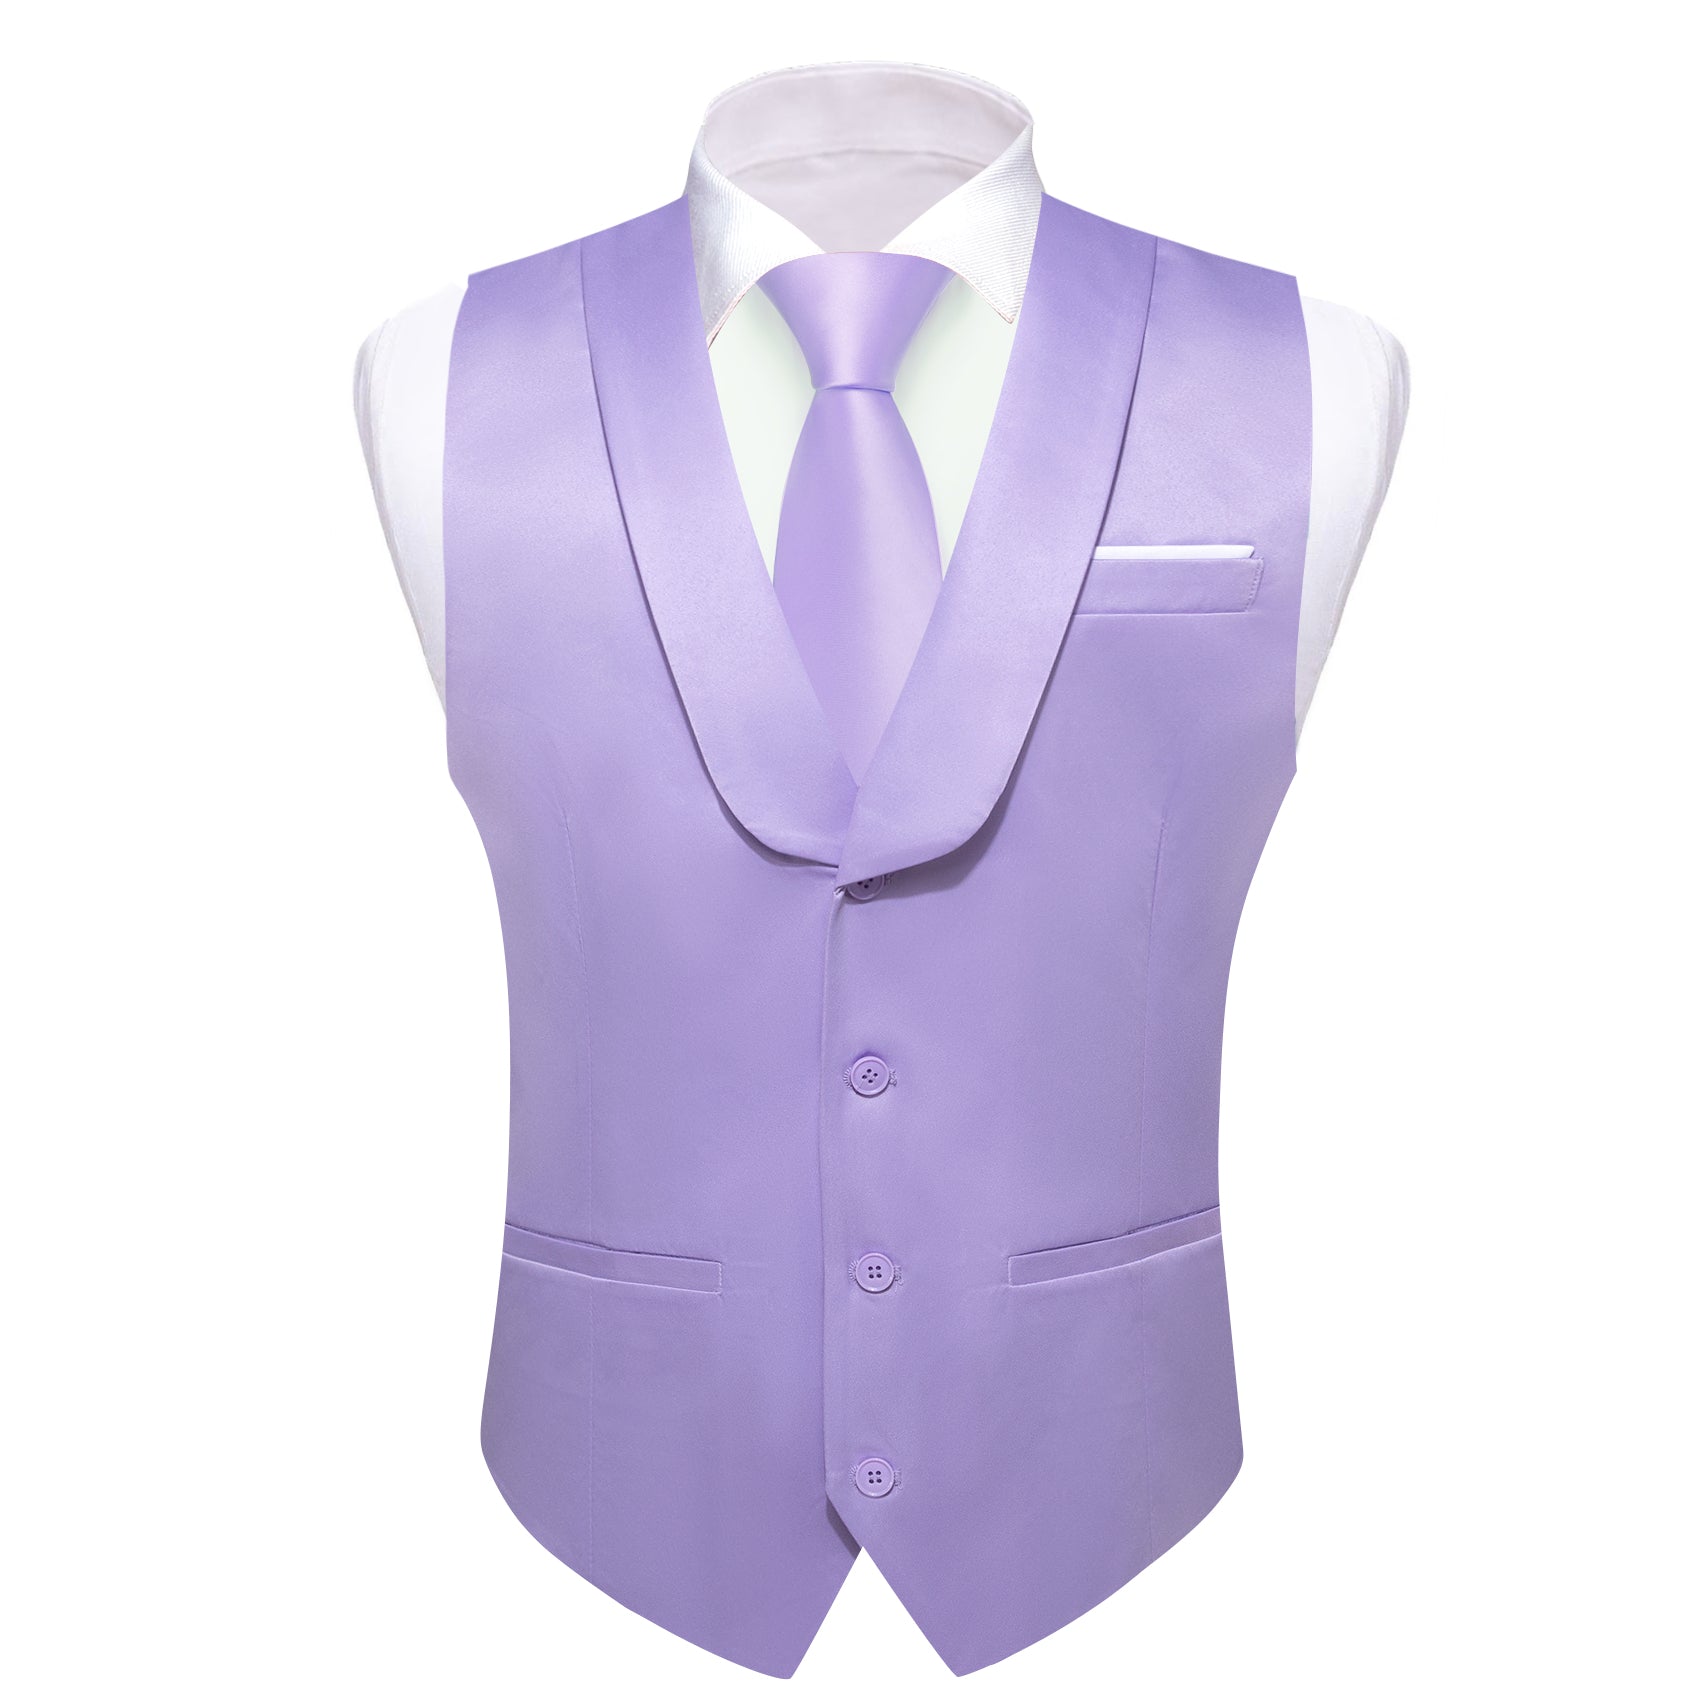 Barry.wang Men's Vest Purple Solid Shawl Collar Silk Vest Waistcoat Set